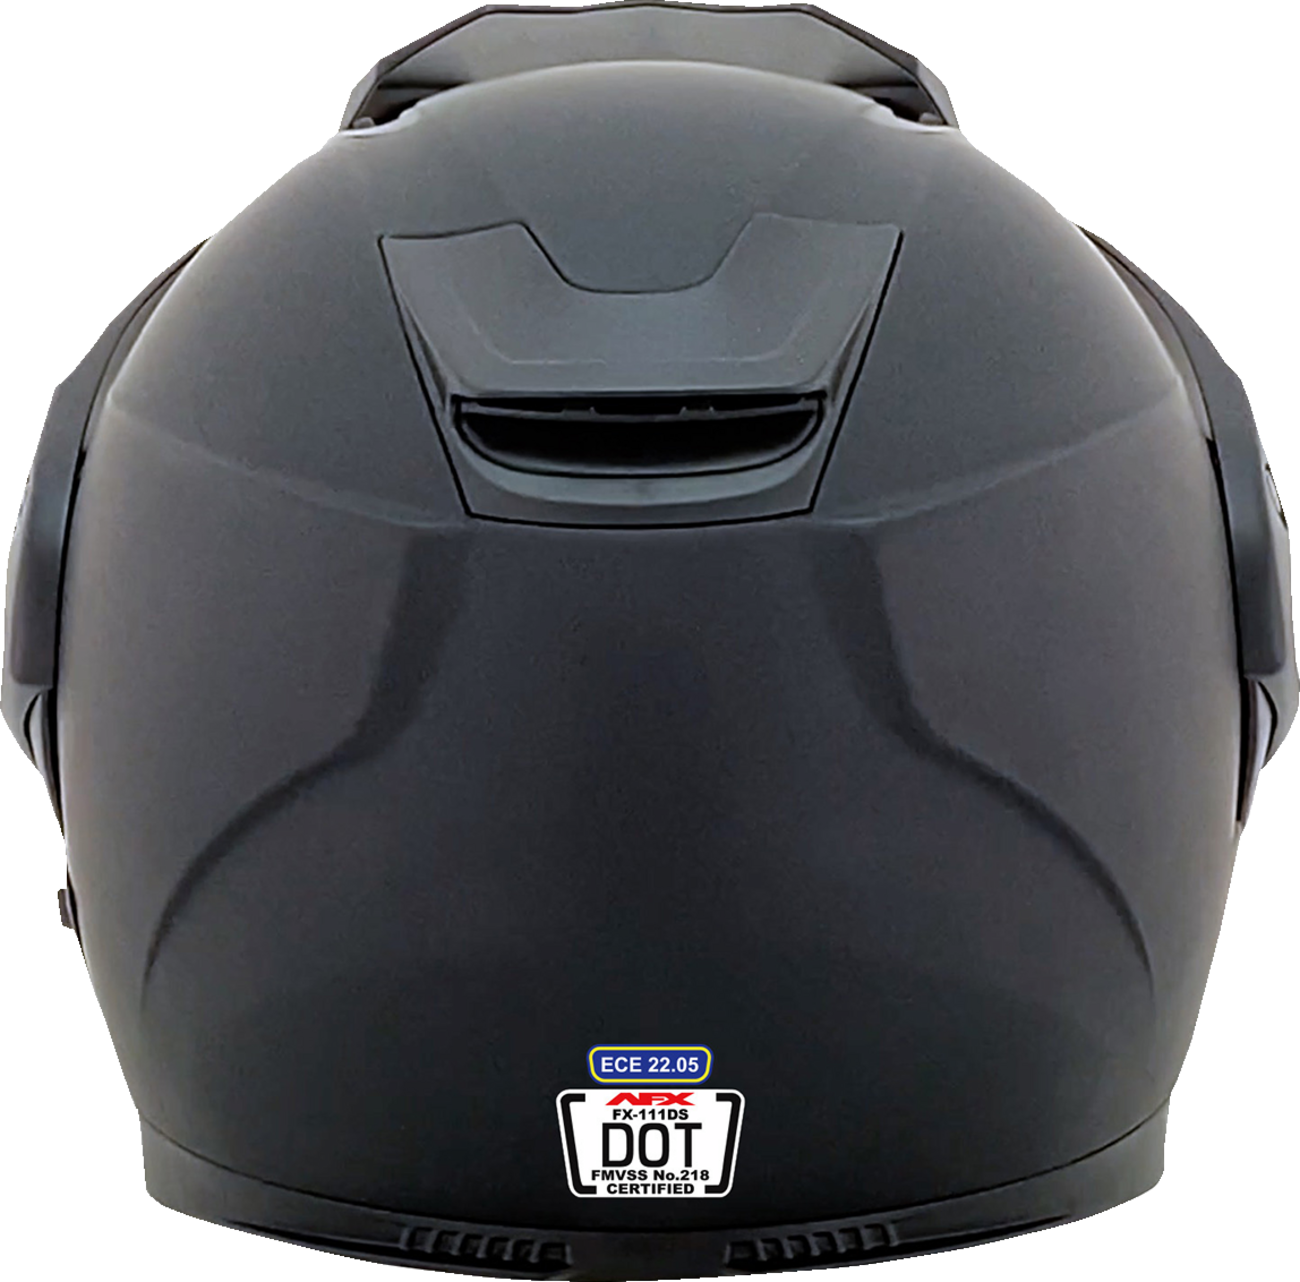 AFX FX-111DS Helmet - Matte Black - 2XL 0140-0125